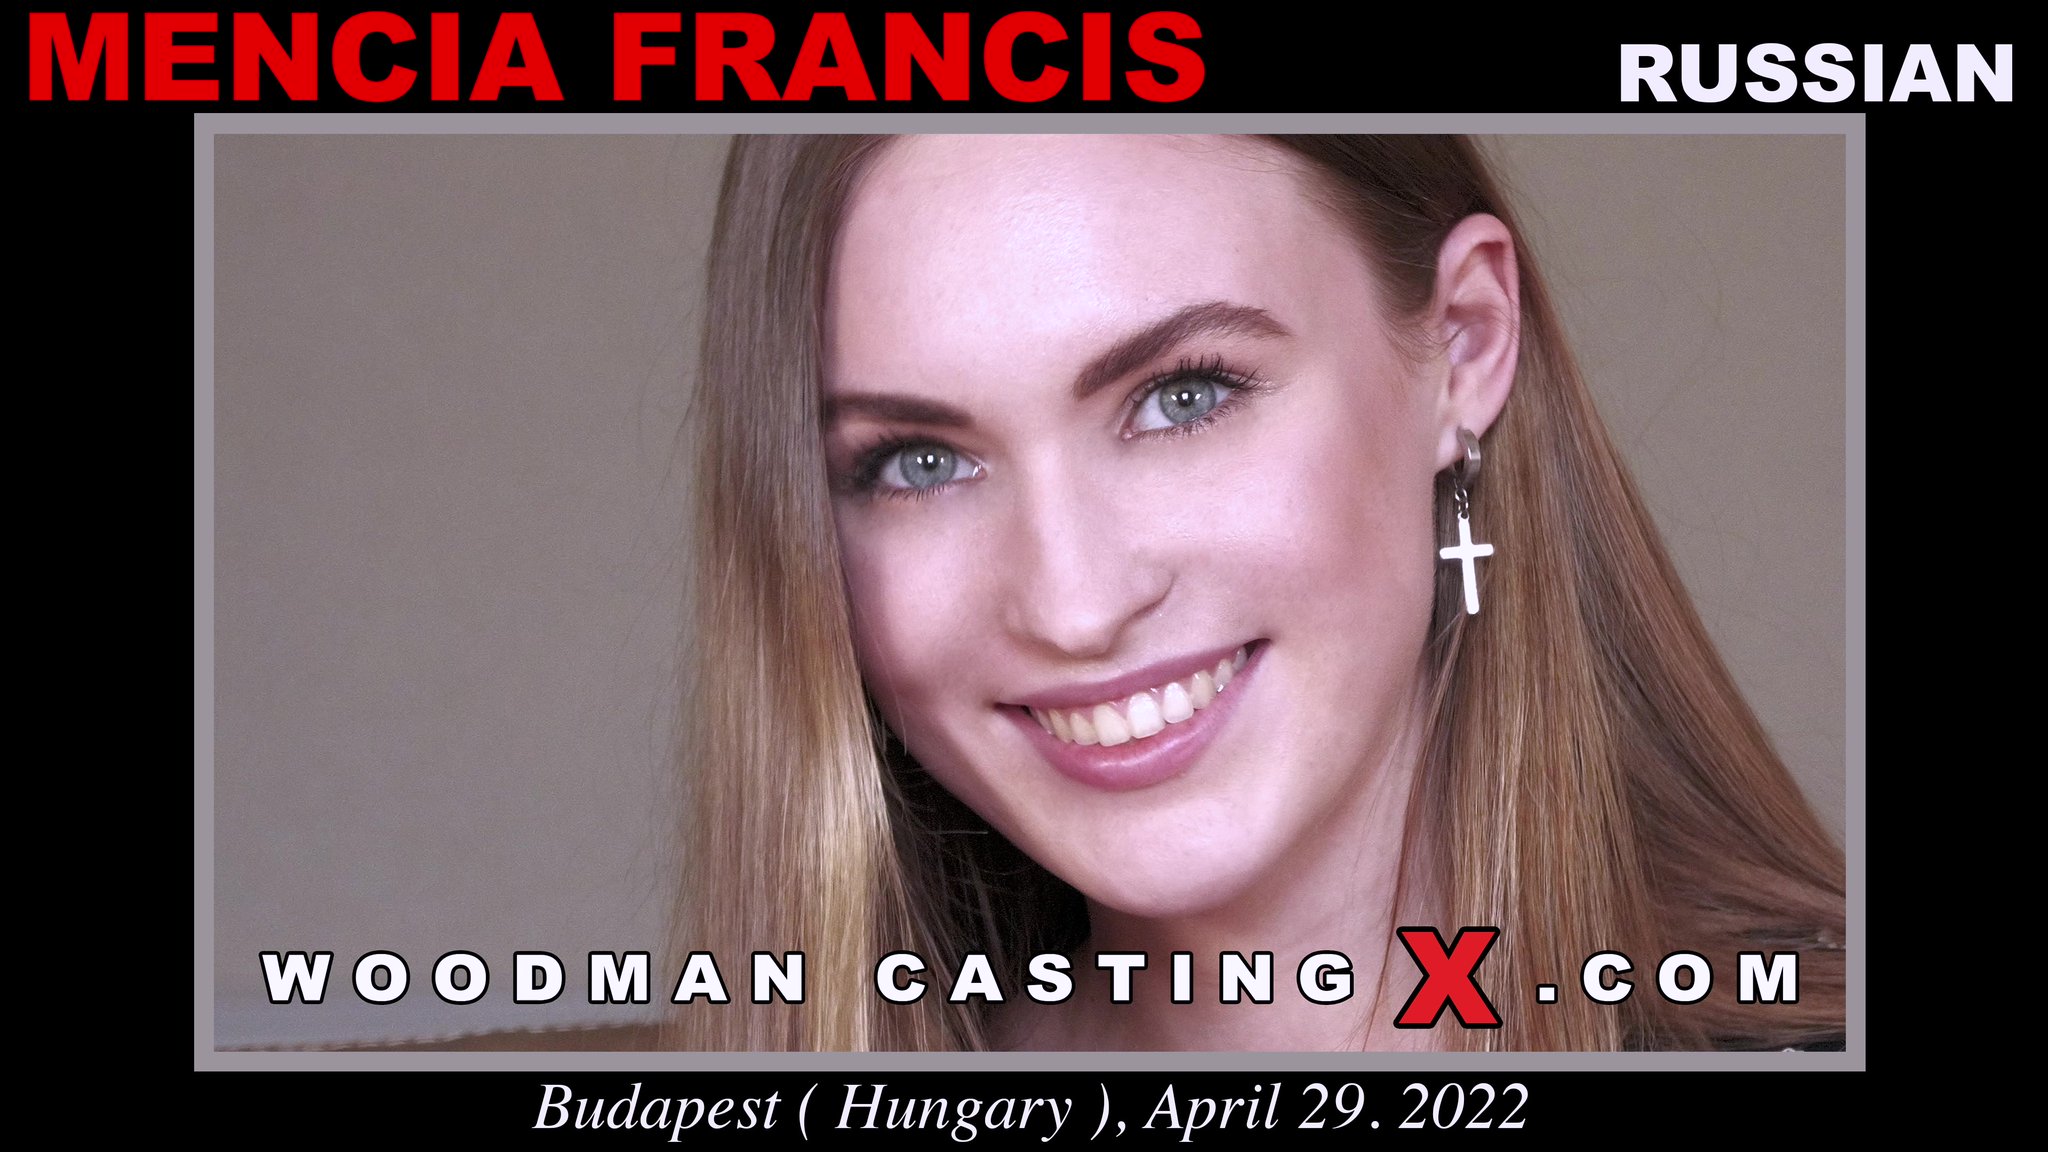 Woodman Casting X On Twitter New Video Mencia Francis 